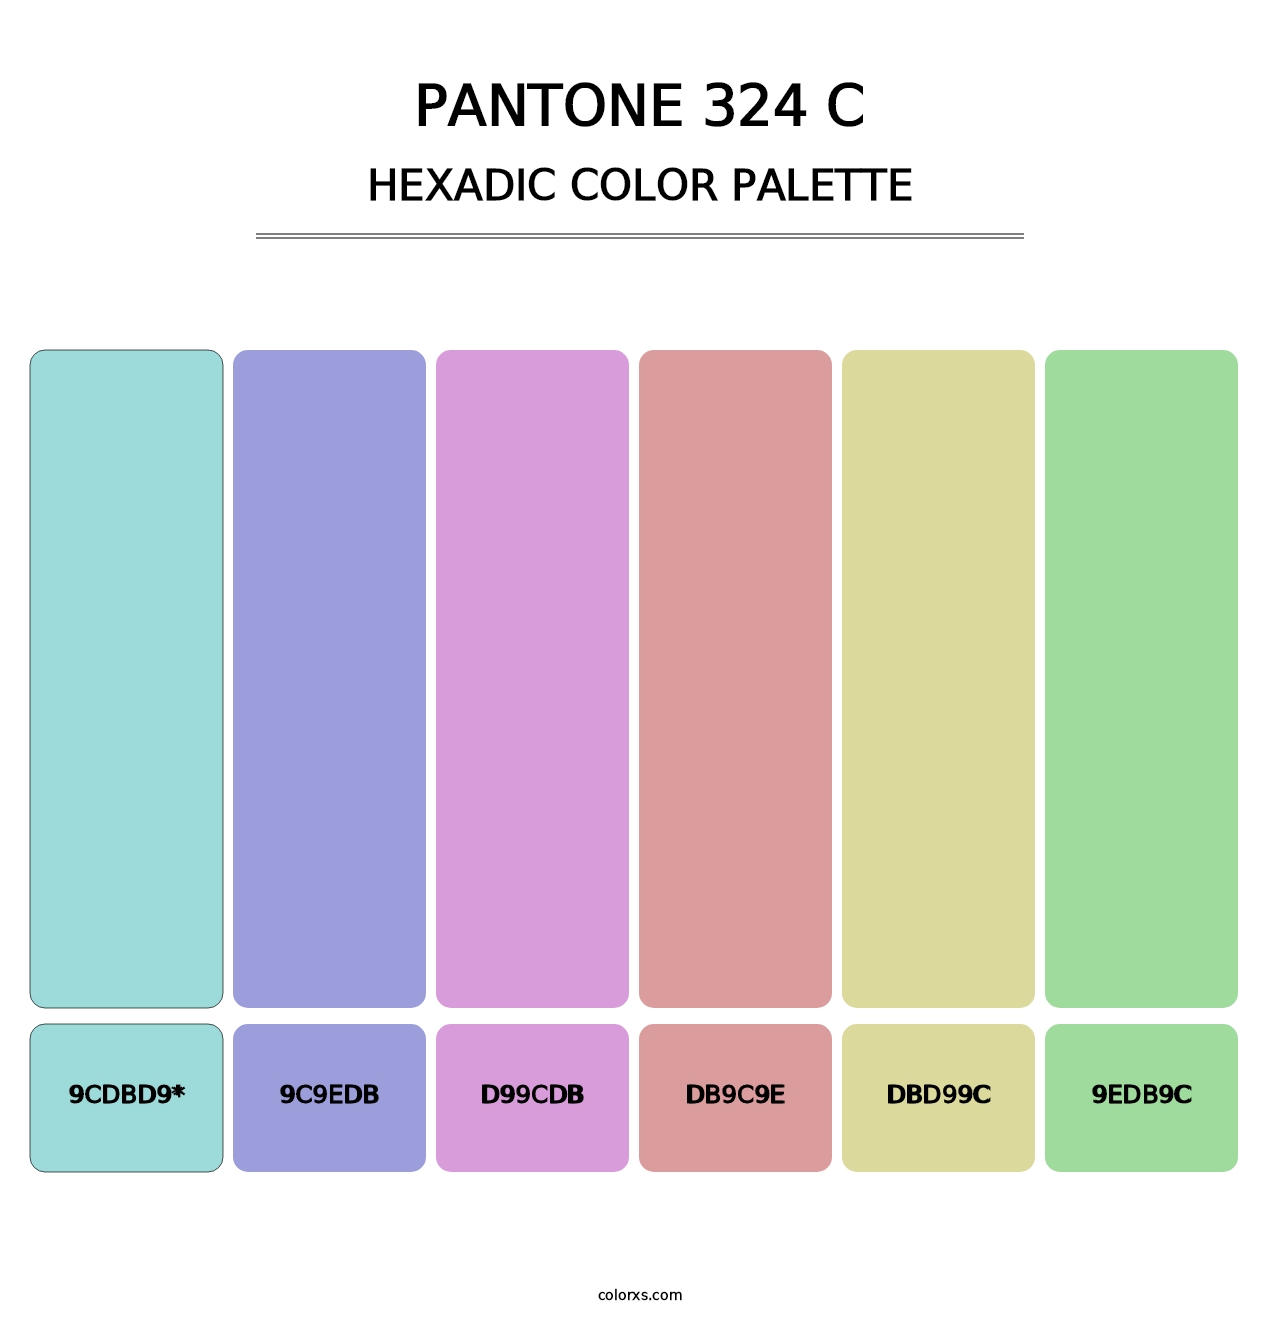 PANTONE 324 C - Hexadic Color Palette